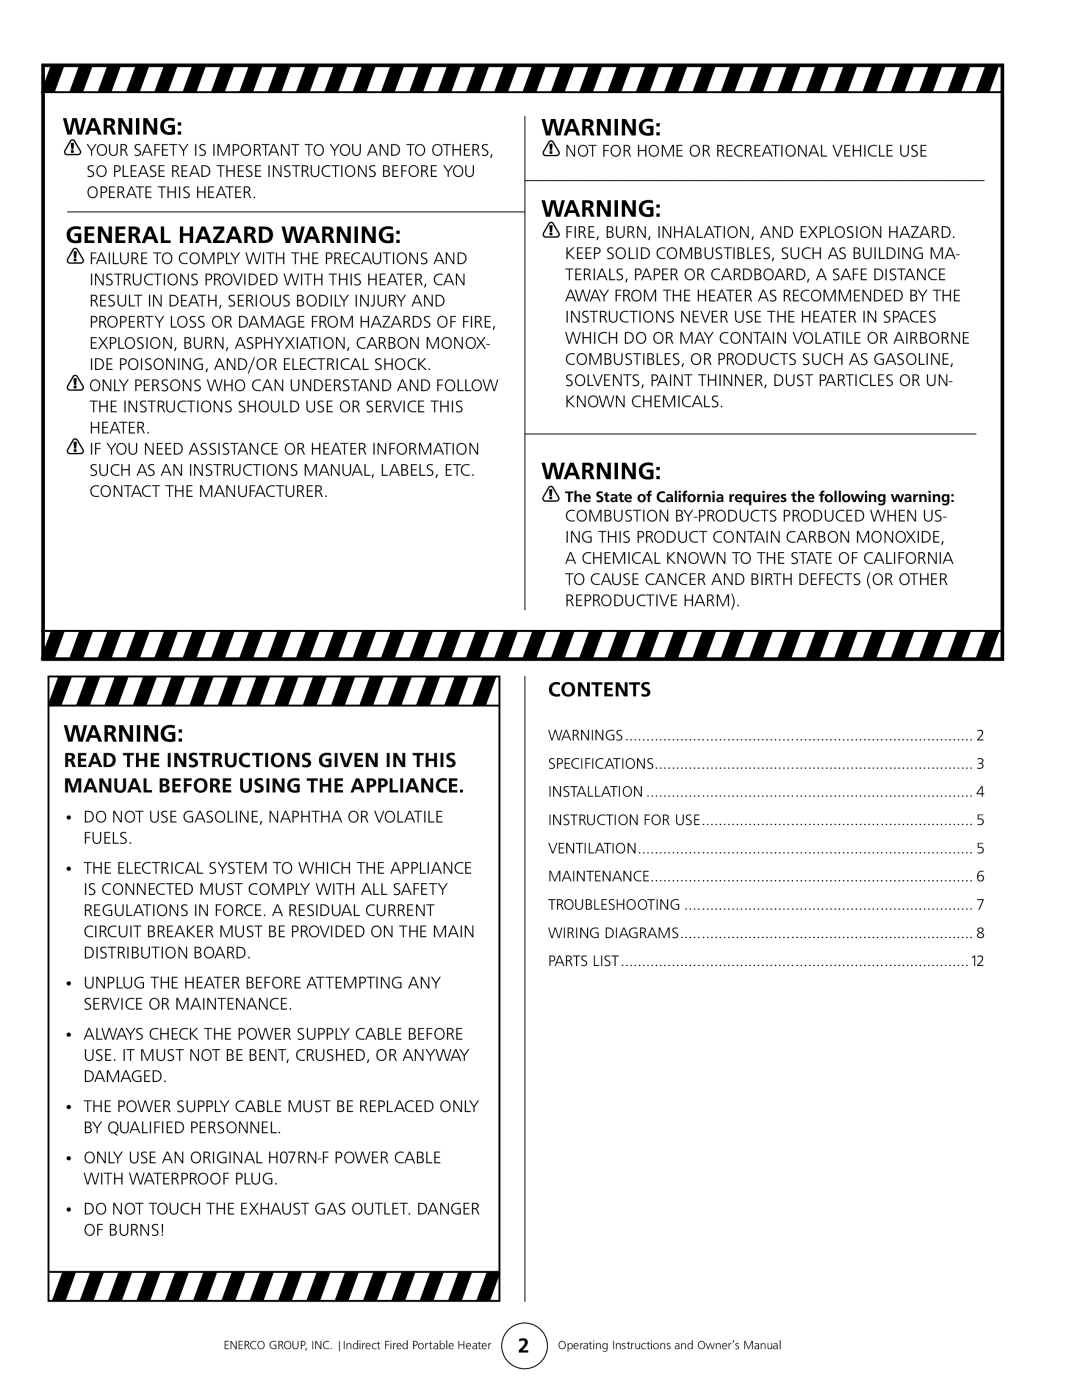 Enerco 7000ID owner manual General Hazard Warning, Contents 